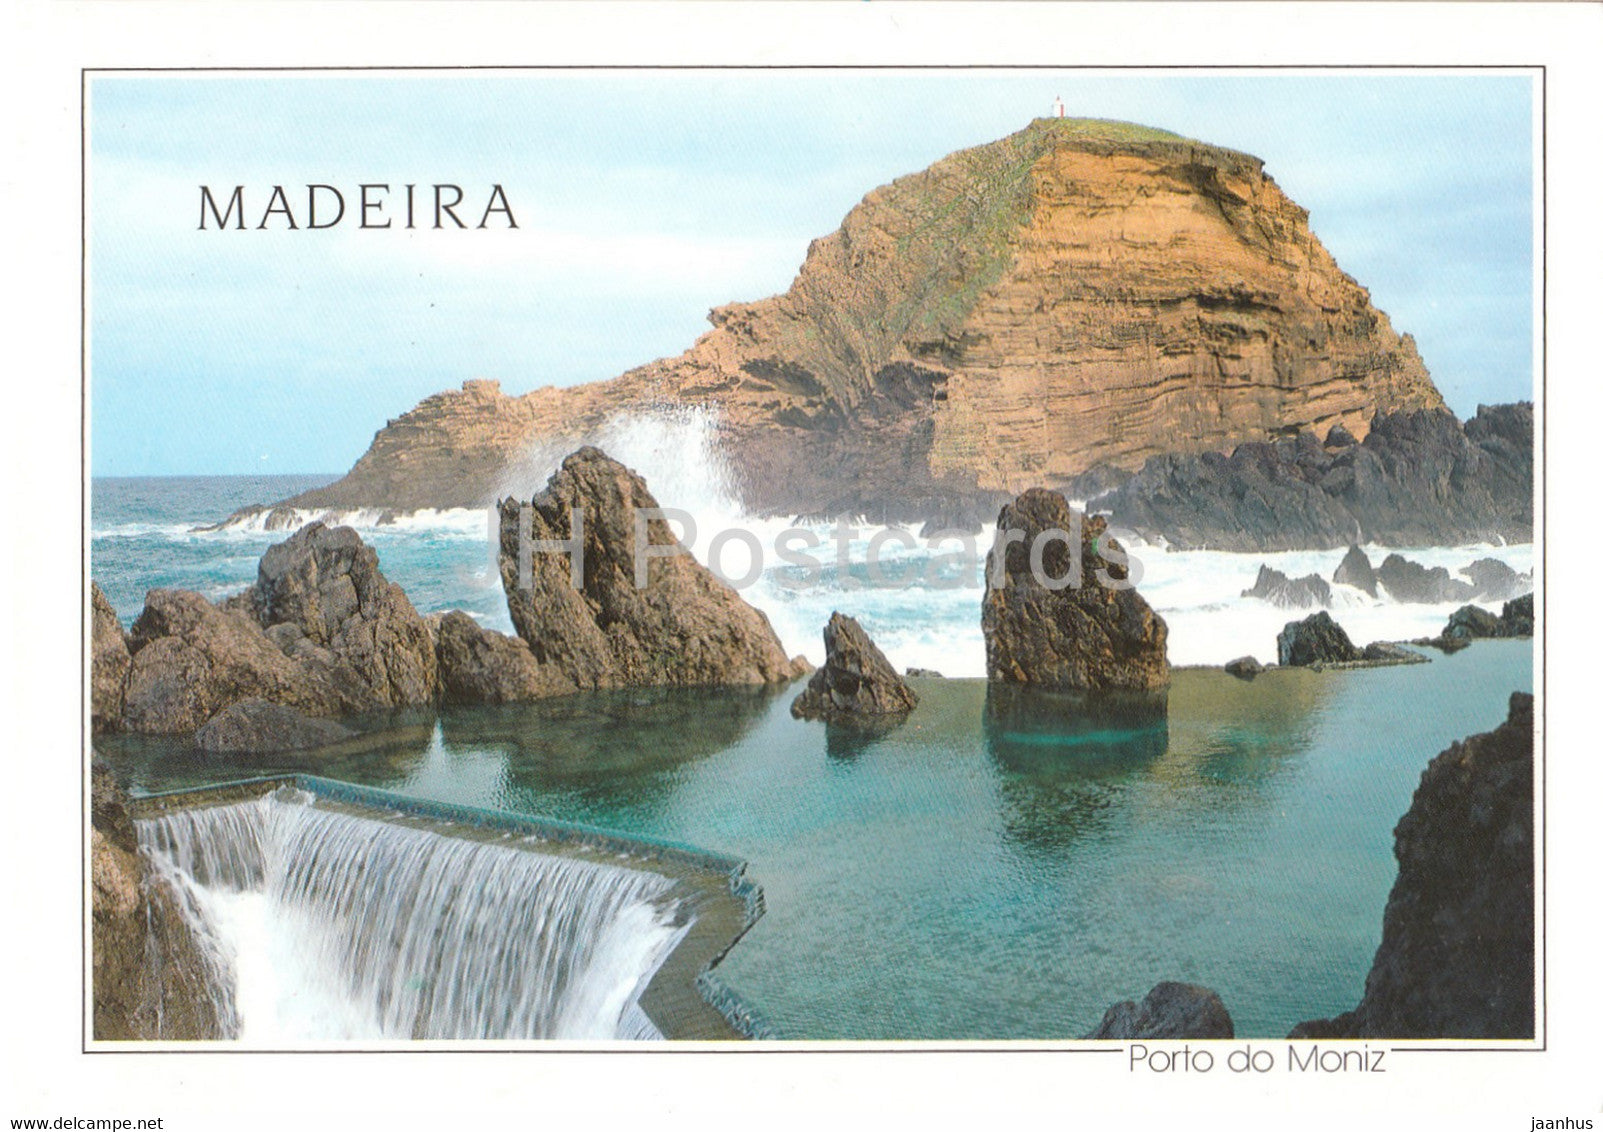 Madeira - Porto do Moniz - Piscina - swimming pool - 1998 - Portugal - used - JH Postcards